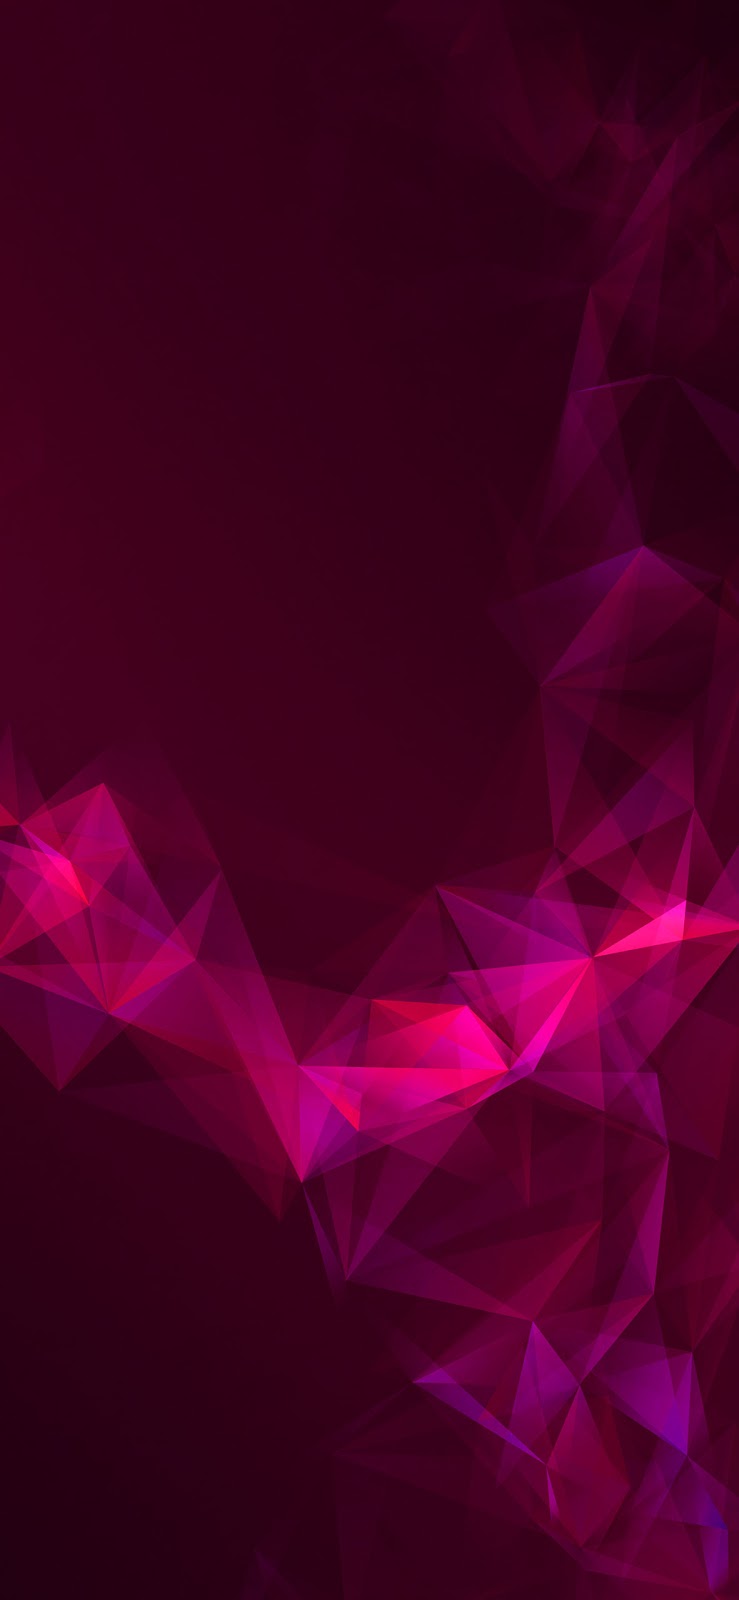 hd wallpaper kostenloser download,violett,rosa,rot,lila,schwarz